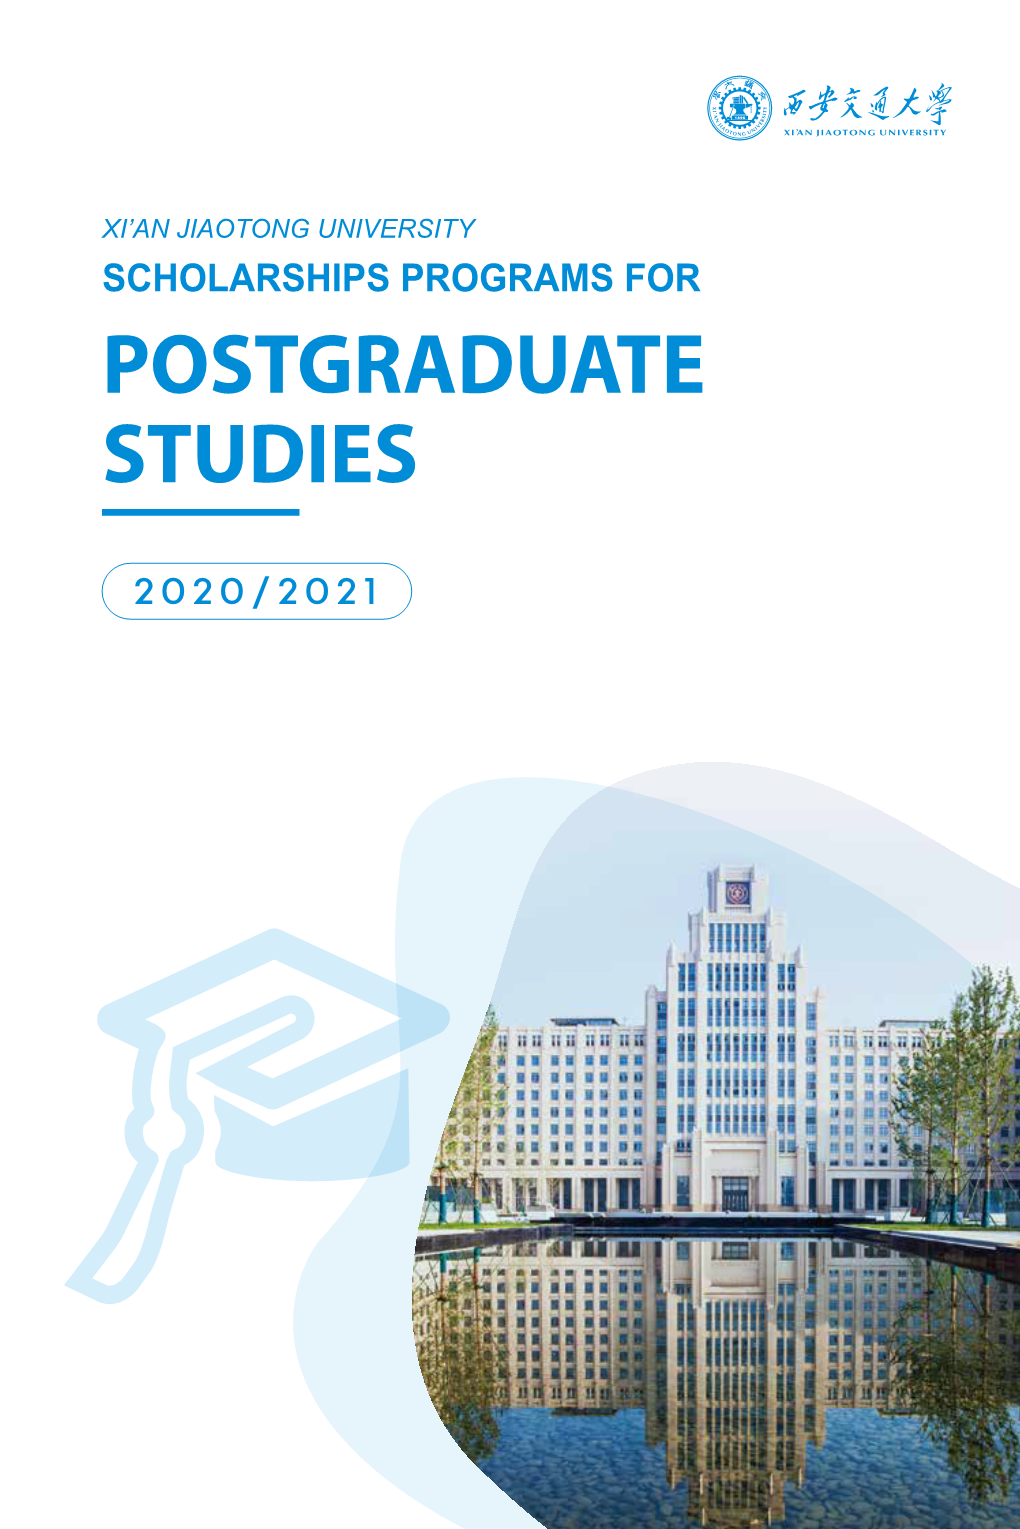 Postgraduate Studies